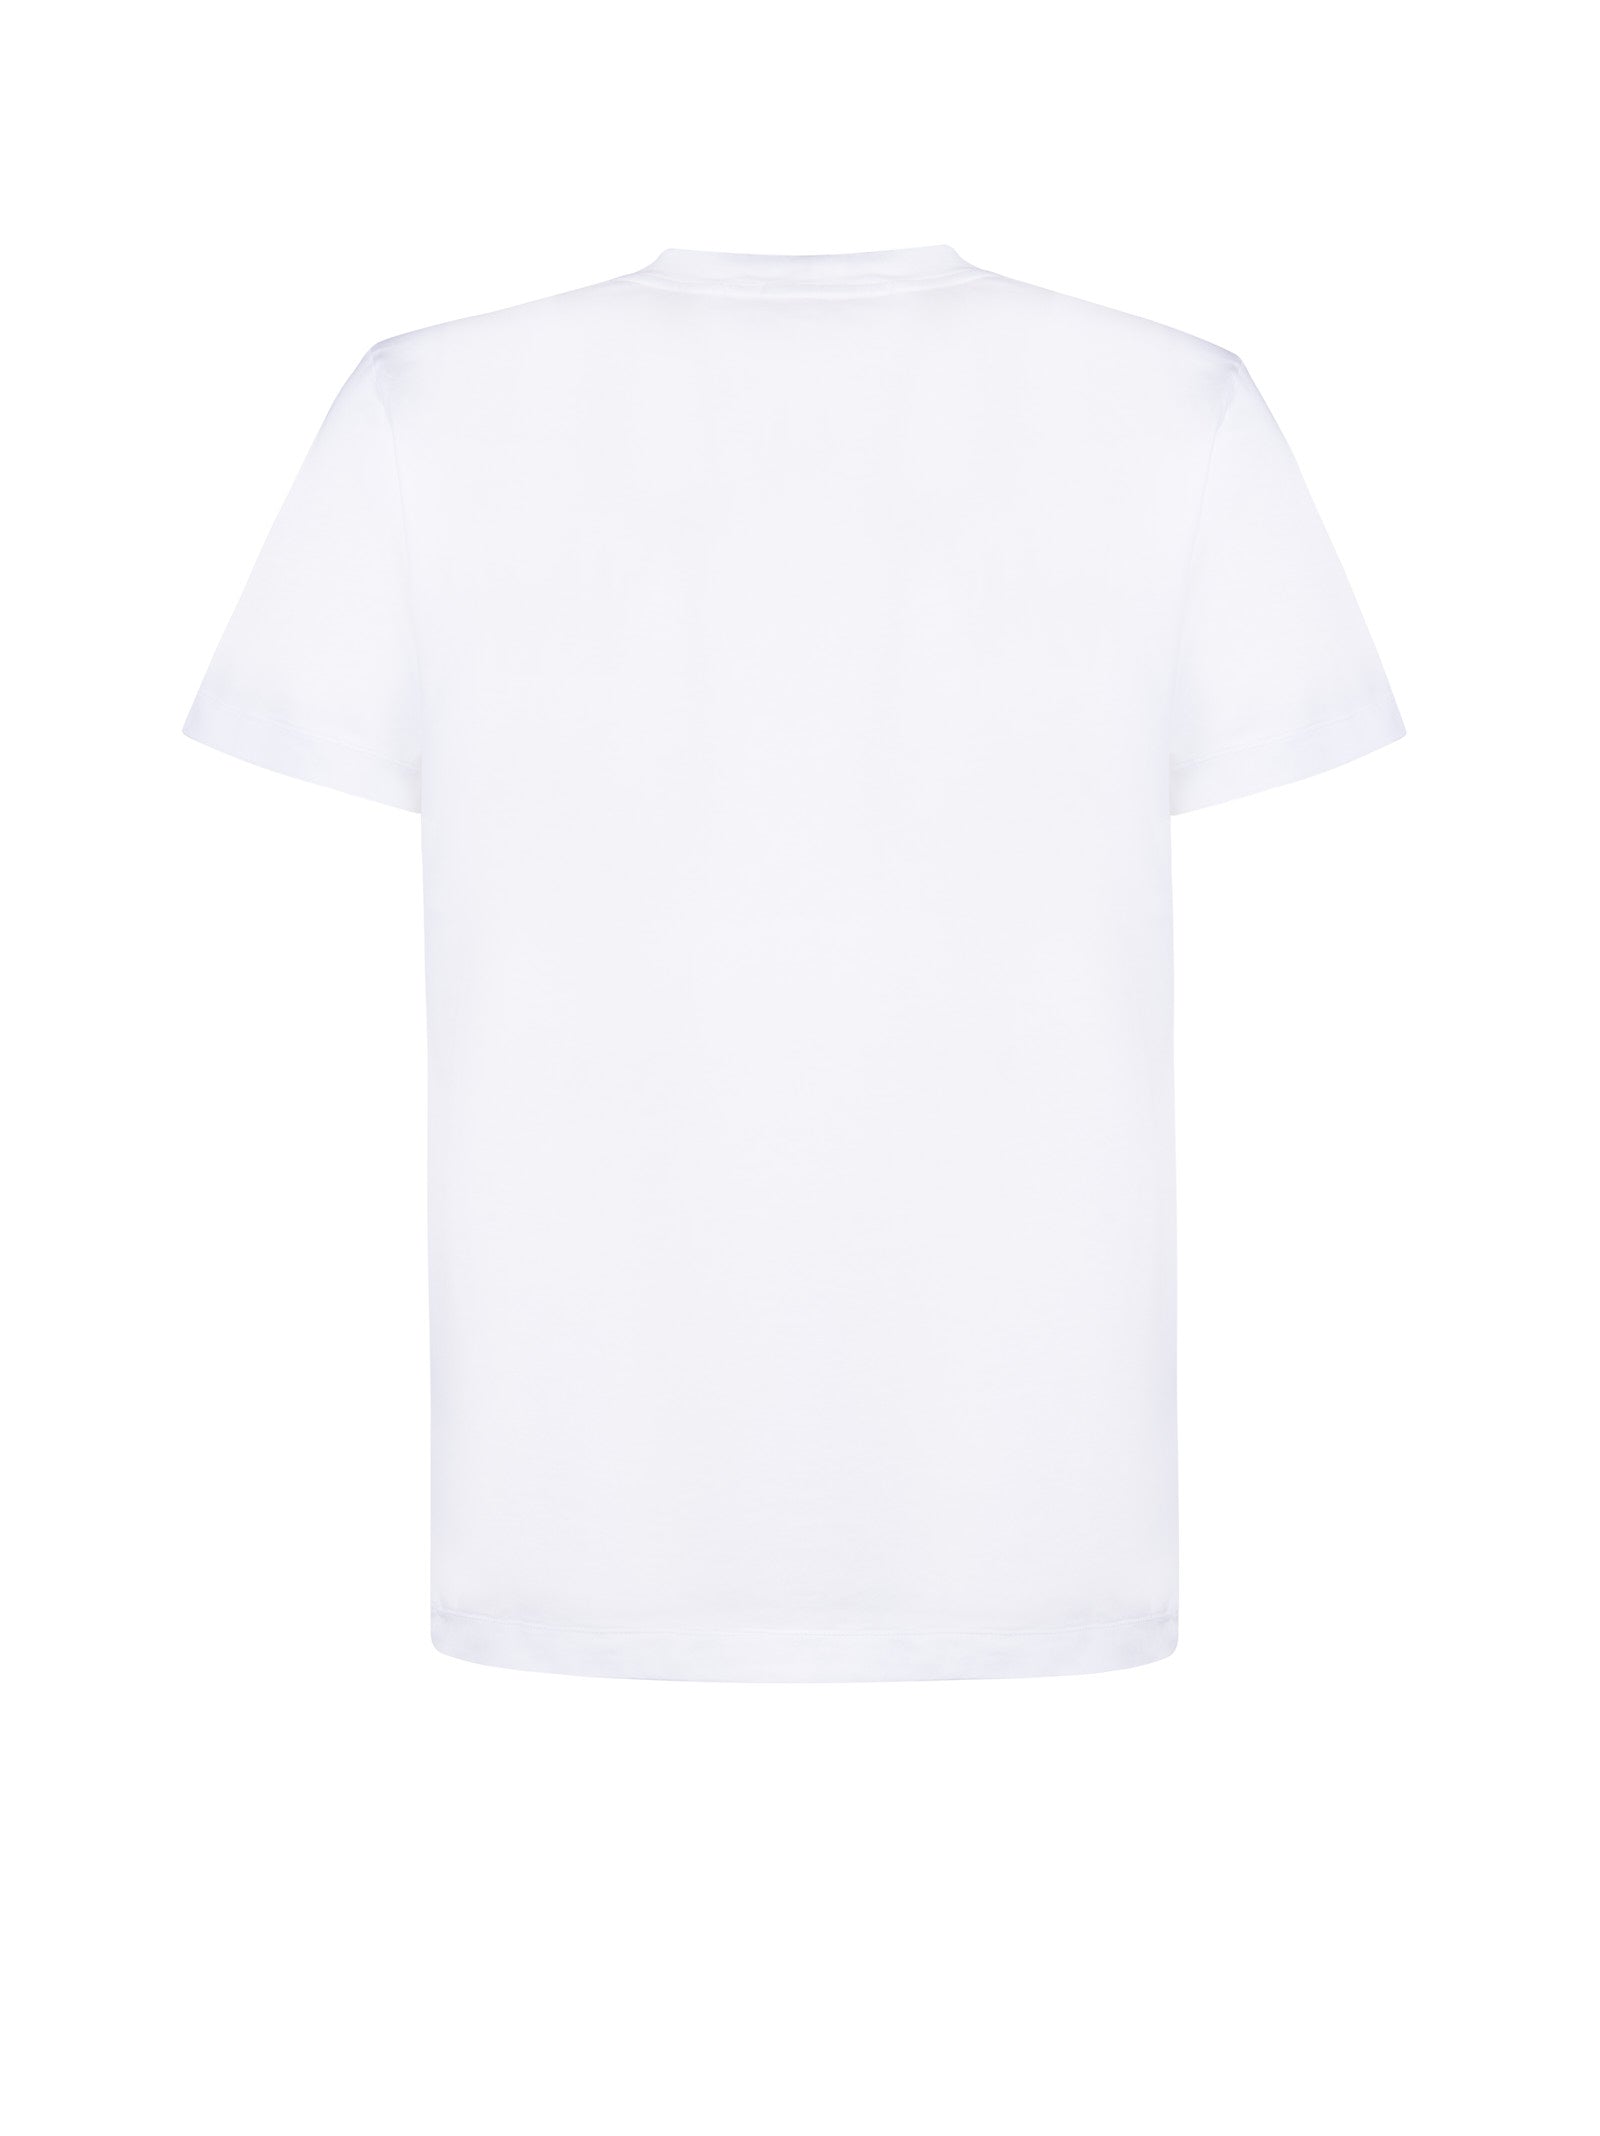 T-shirt STONE ISLAND
White